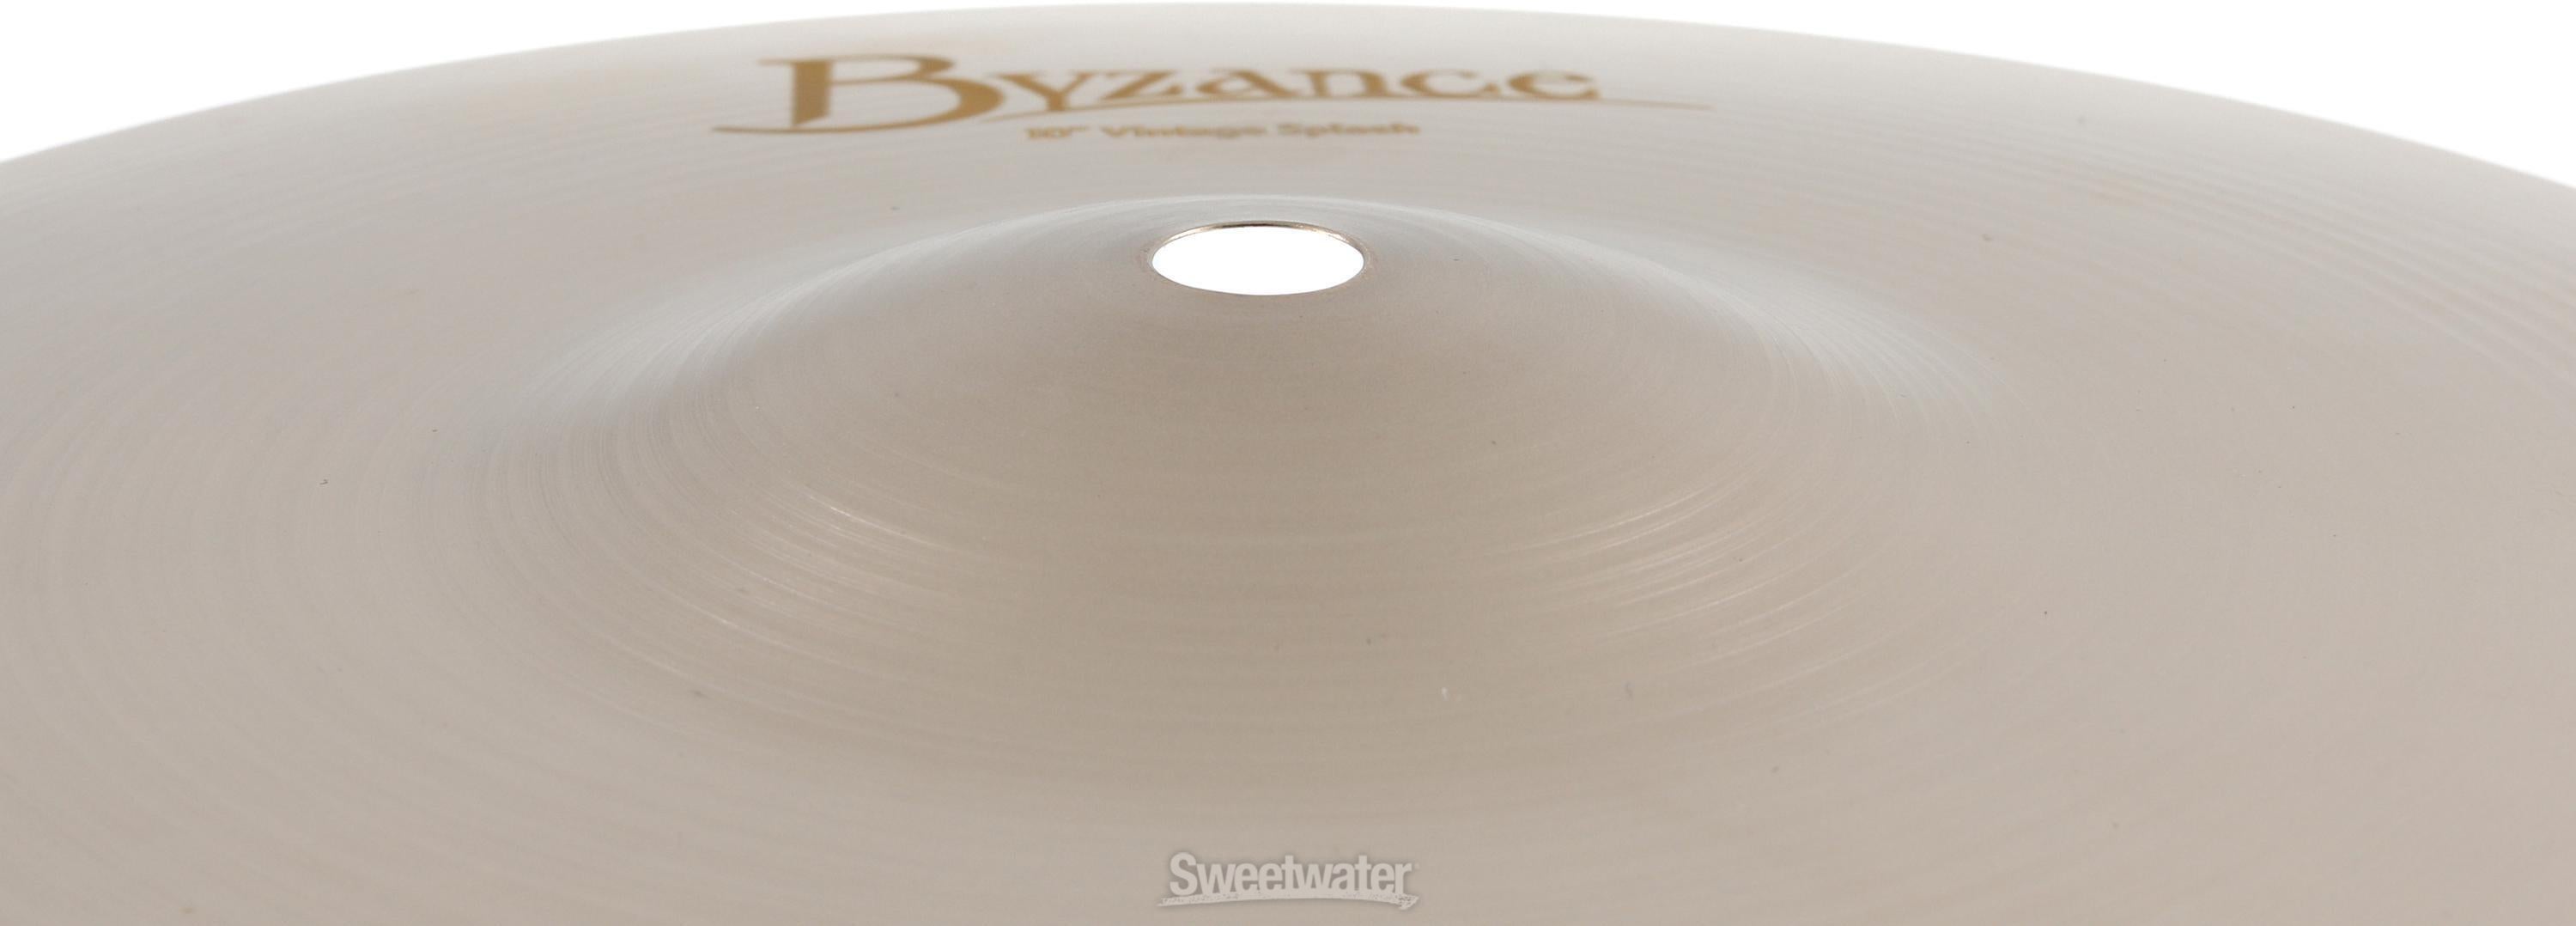 Meinl Cymbals 10 inch Byzance Vintage Splash Cymbal | Sweetwater